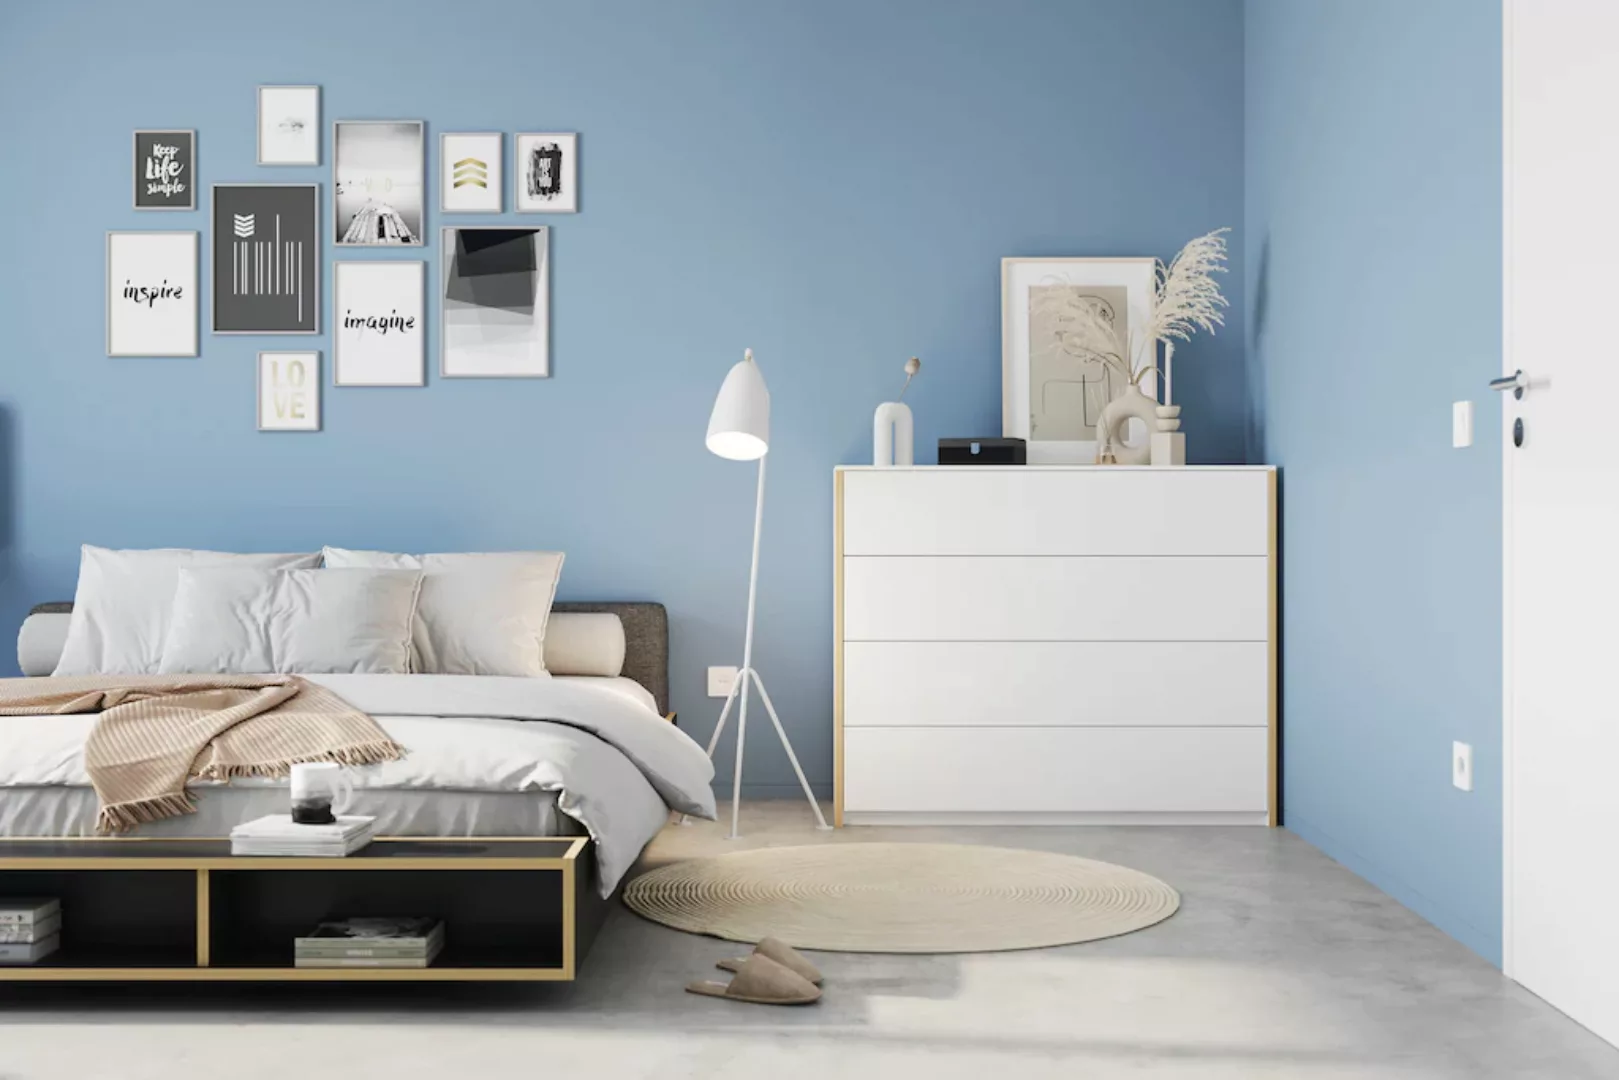 Müller SMALL LIVING Futonbett "MAUDE Bett", Überlänge 210 cm günstig online kaufen